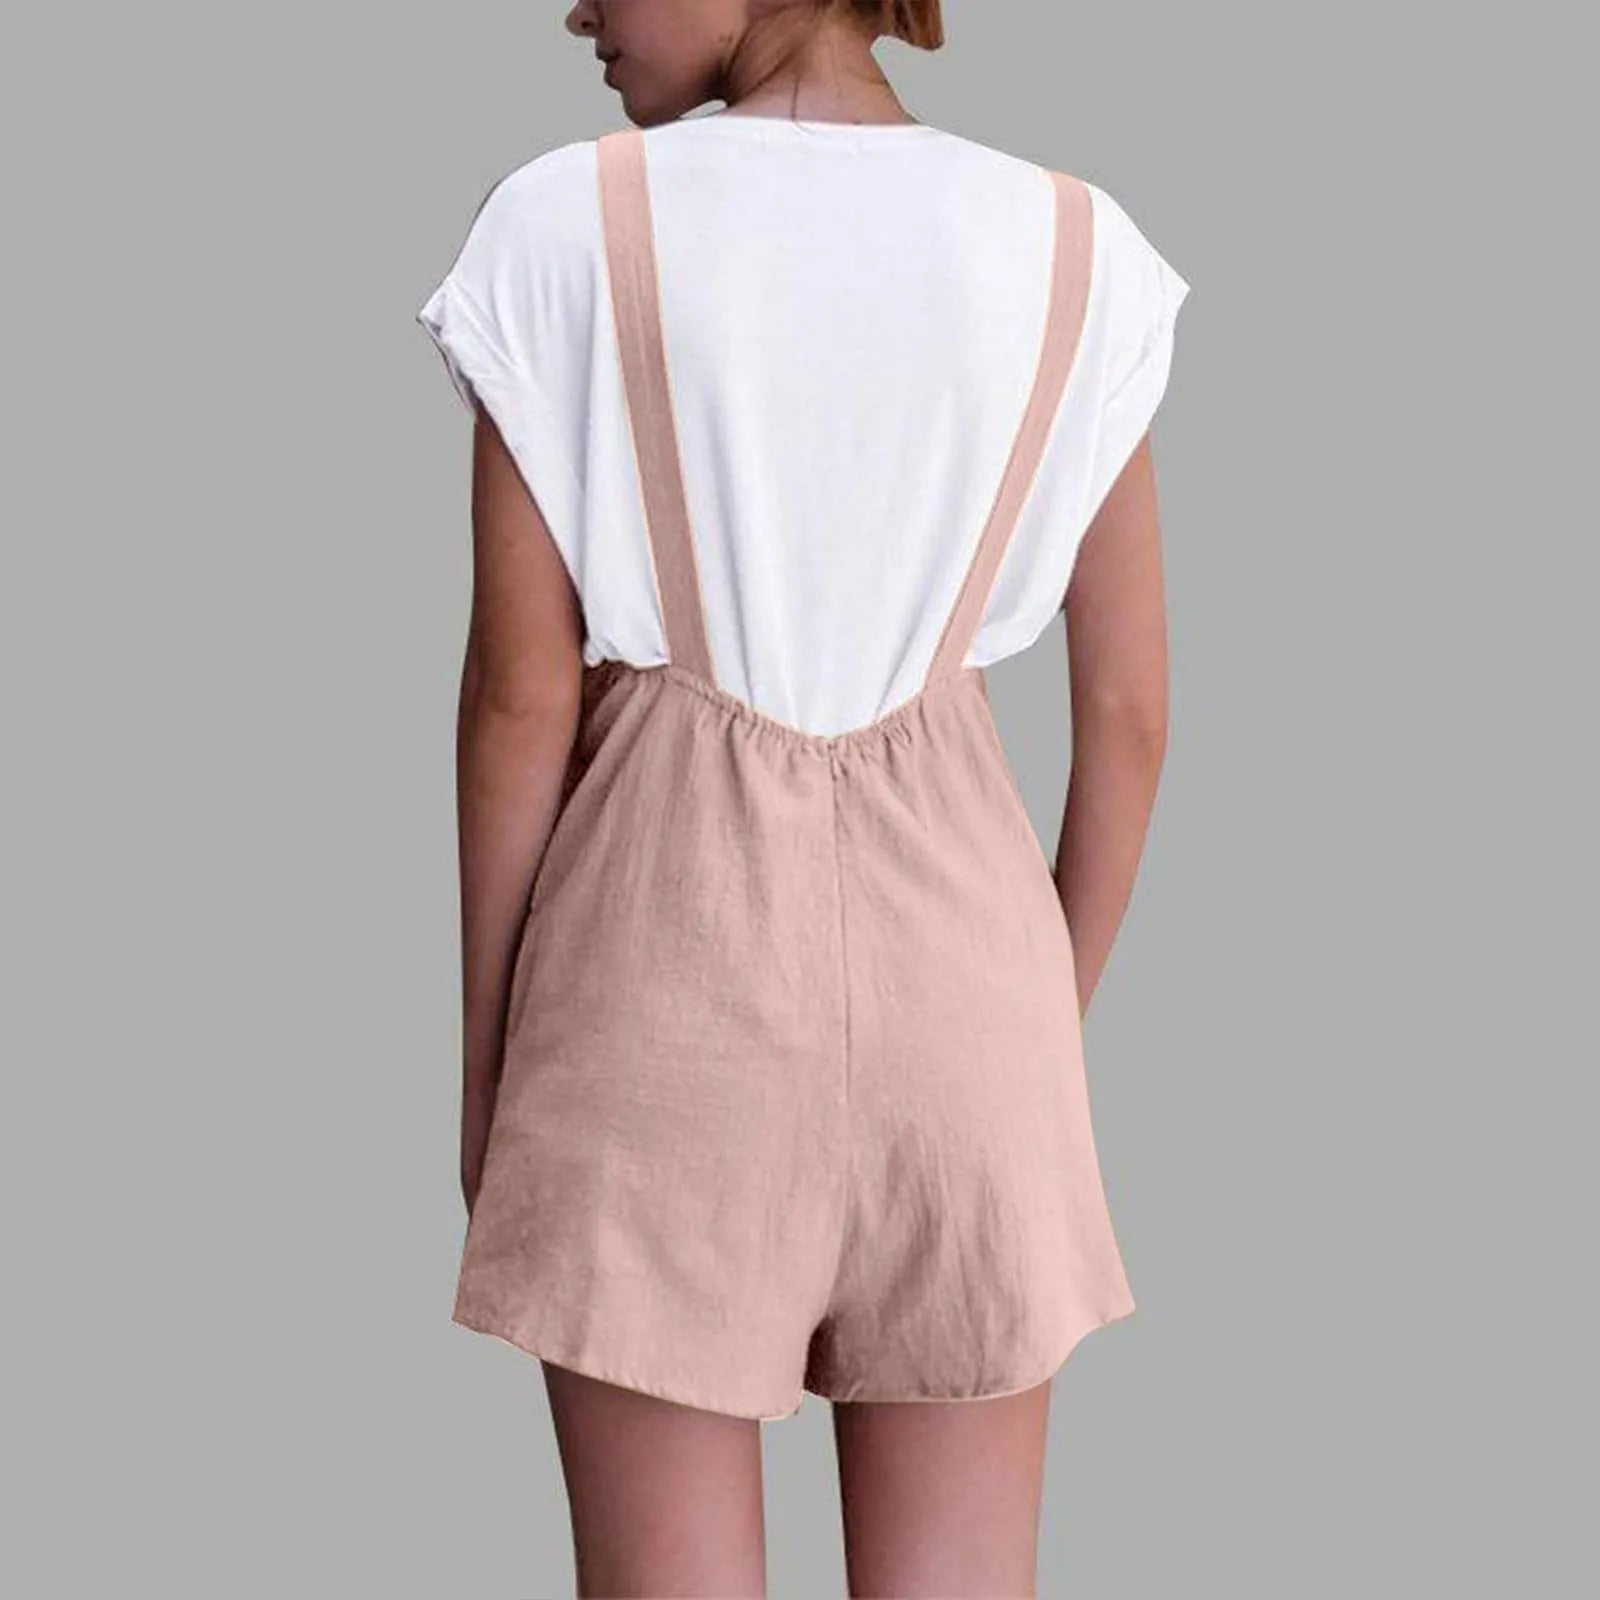 Vintage Sleeveless Cotton Linen Bib Overalls: Summer Women's Playsuit with Button Pockets